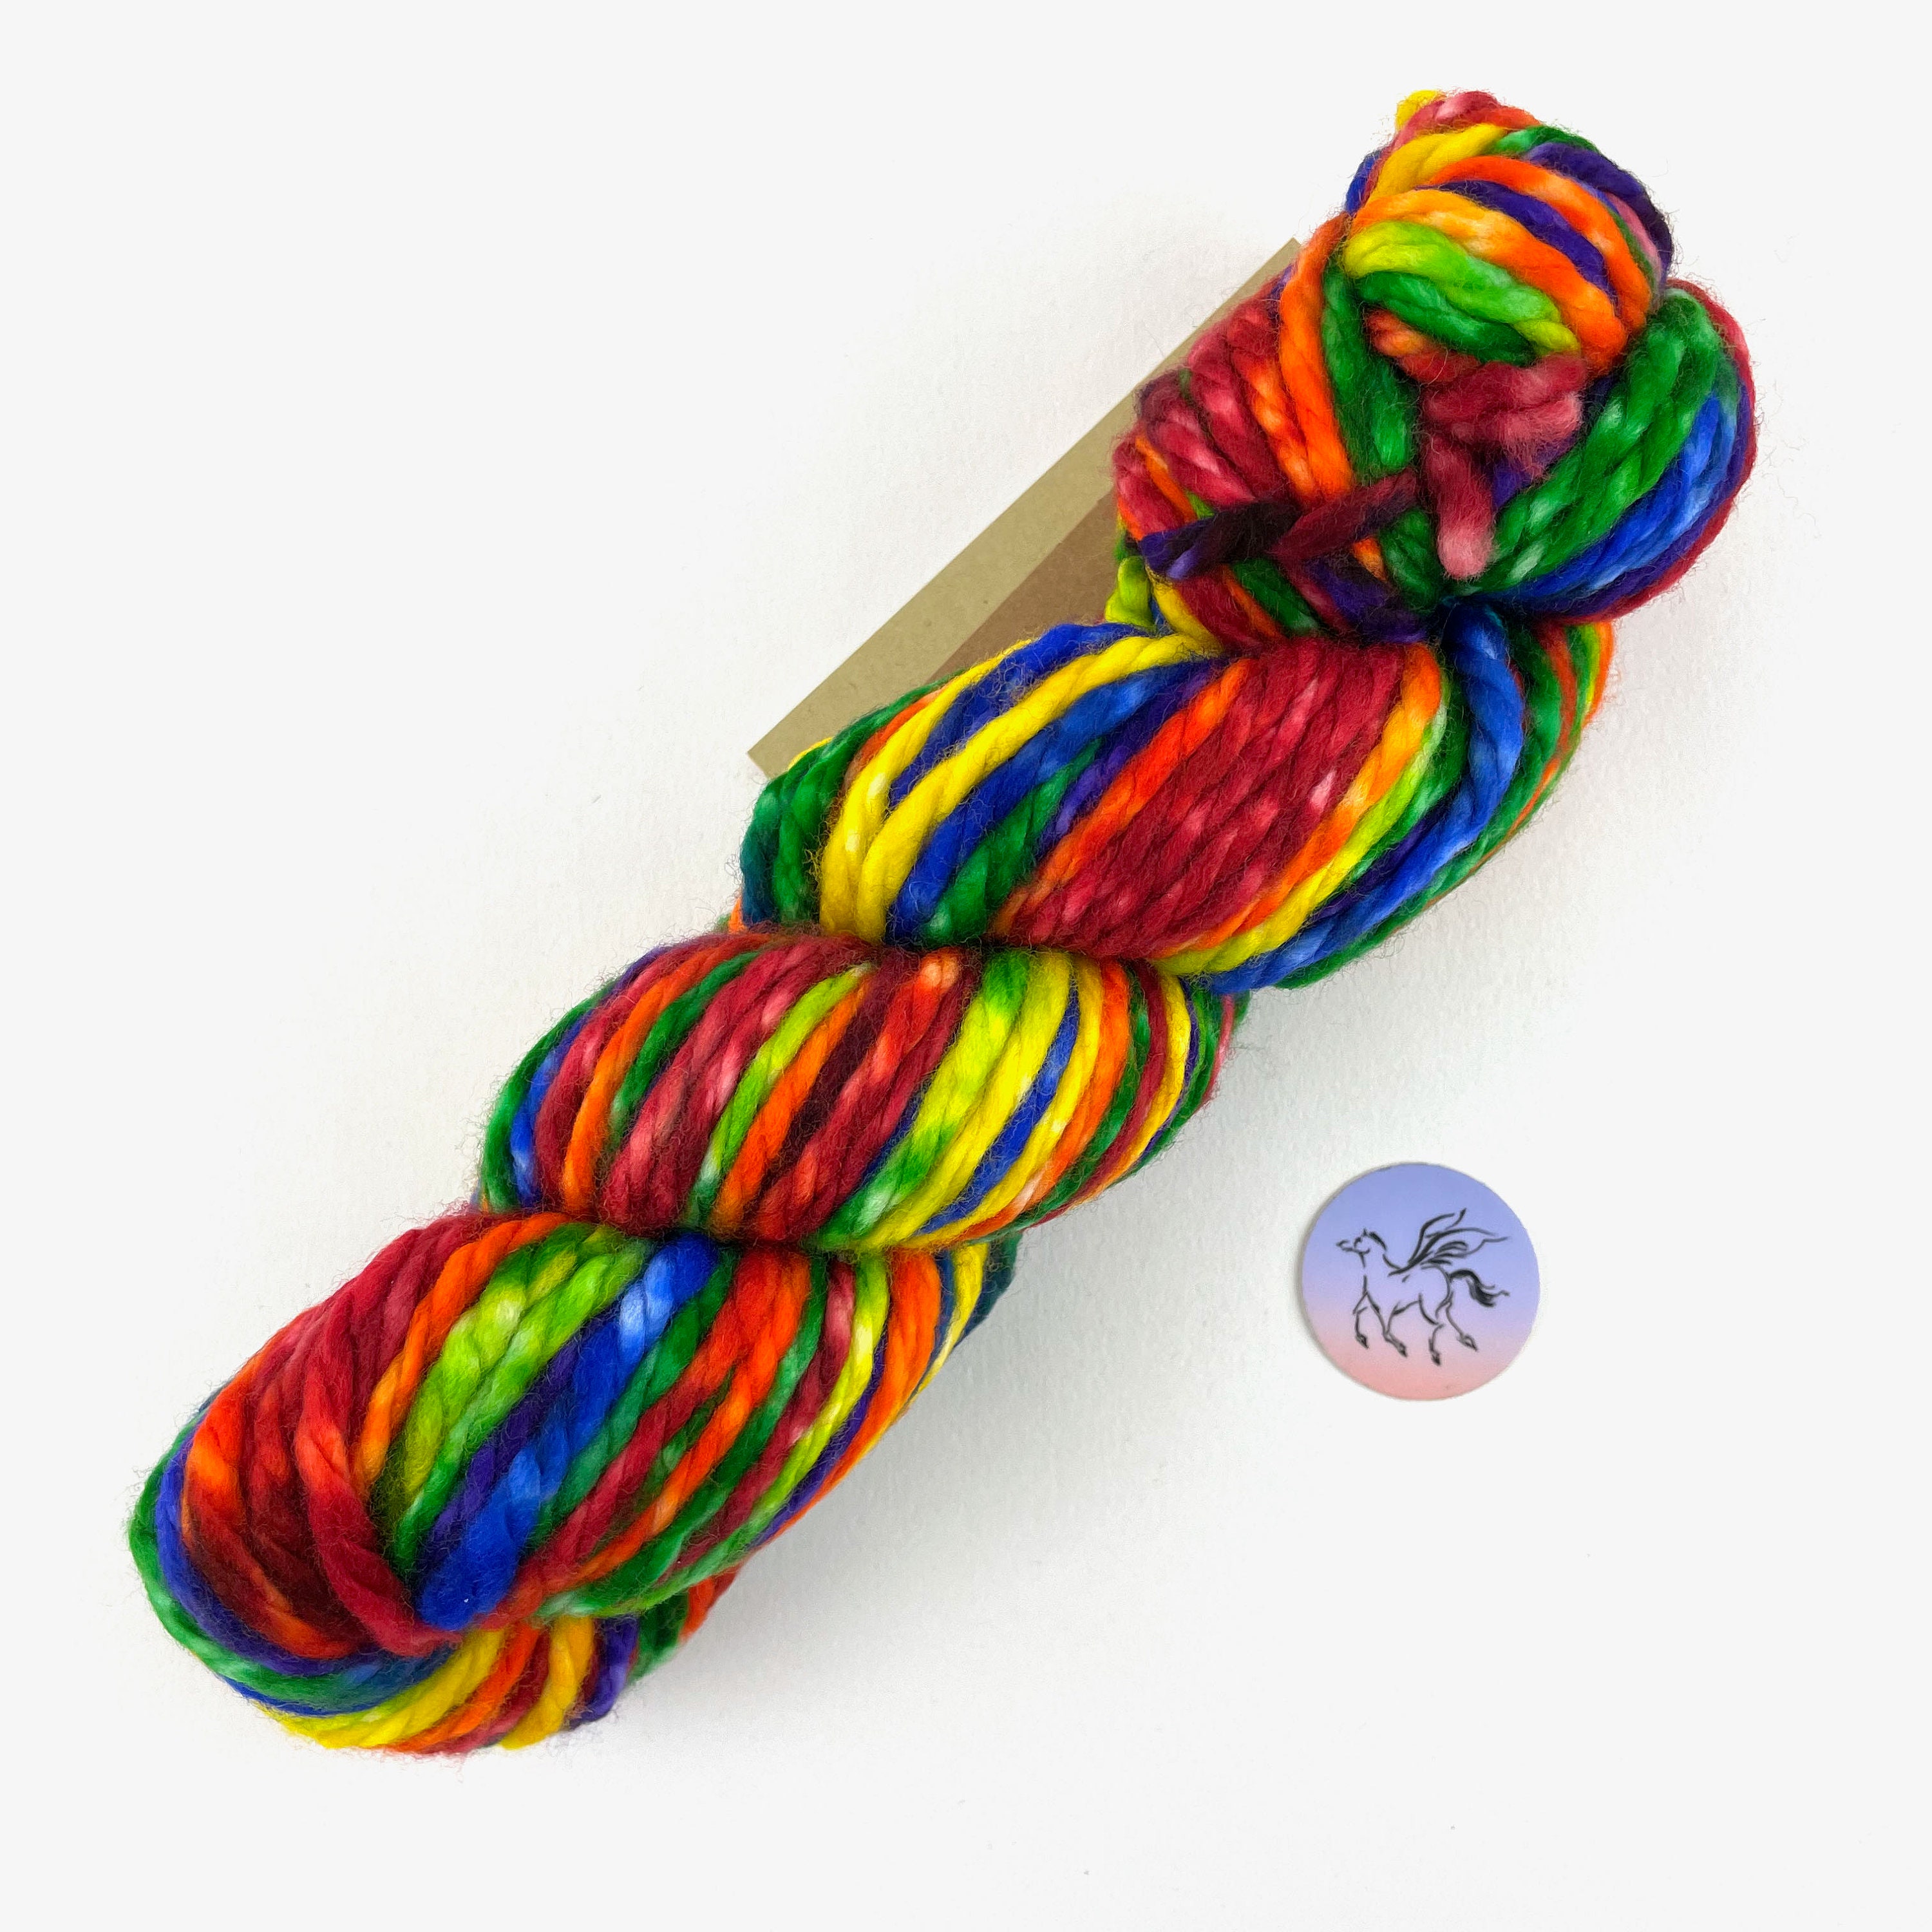 Urth Yarns Koozoo Hand Dyed Bulky Merino Yarn -  Portugal